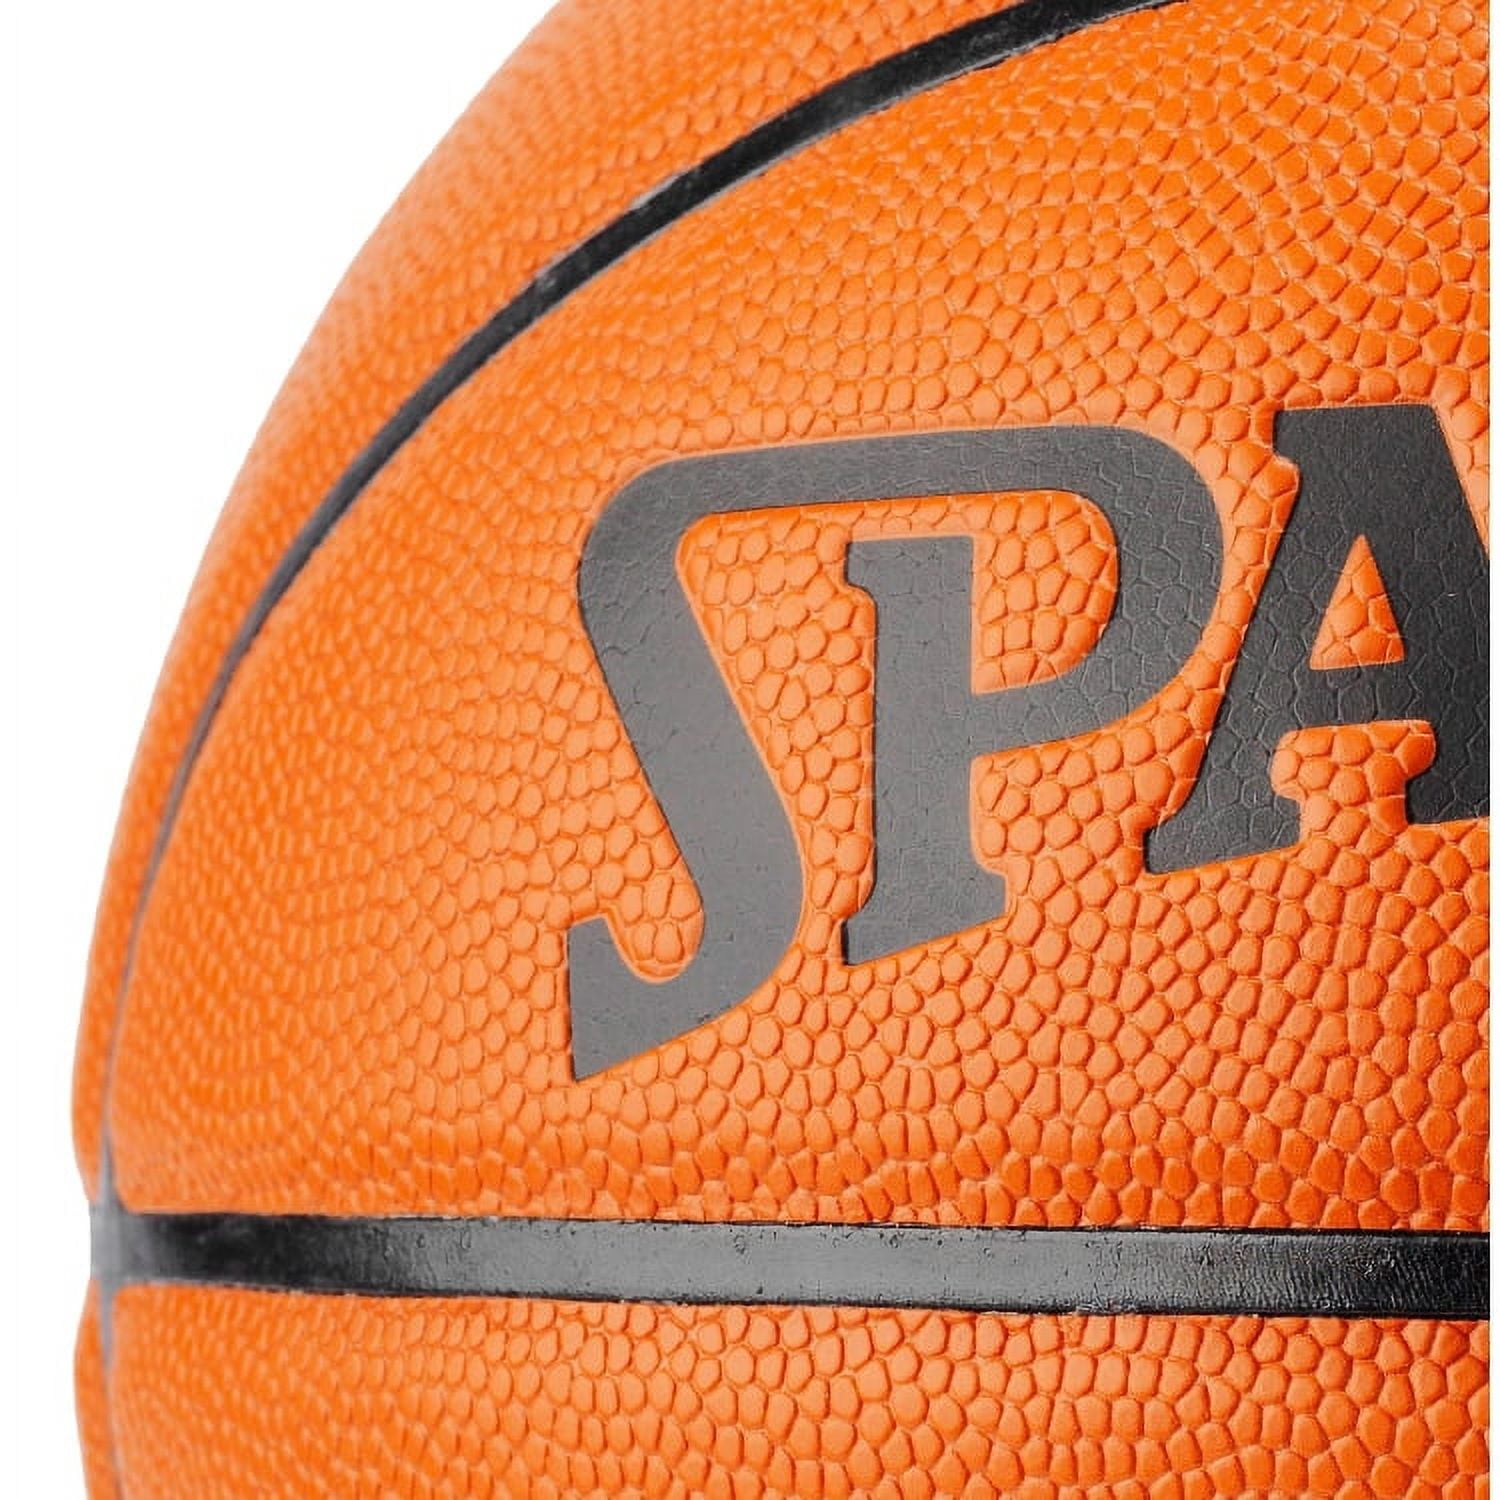 SPALDlNG NBA GR7 Class PU Leather Material Basketball Ball, Mesh